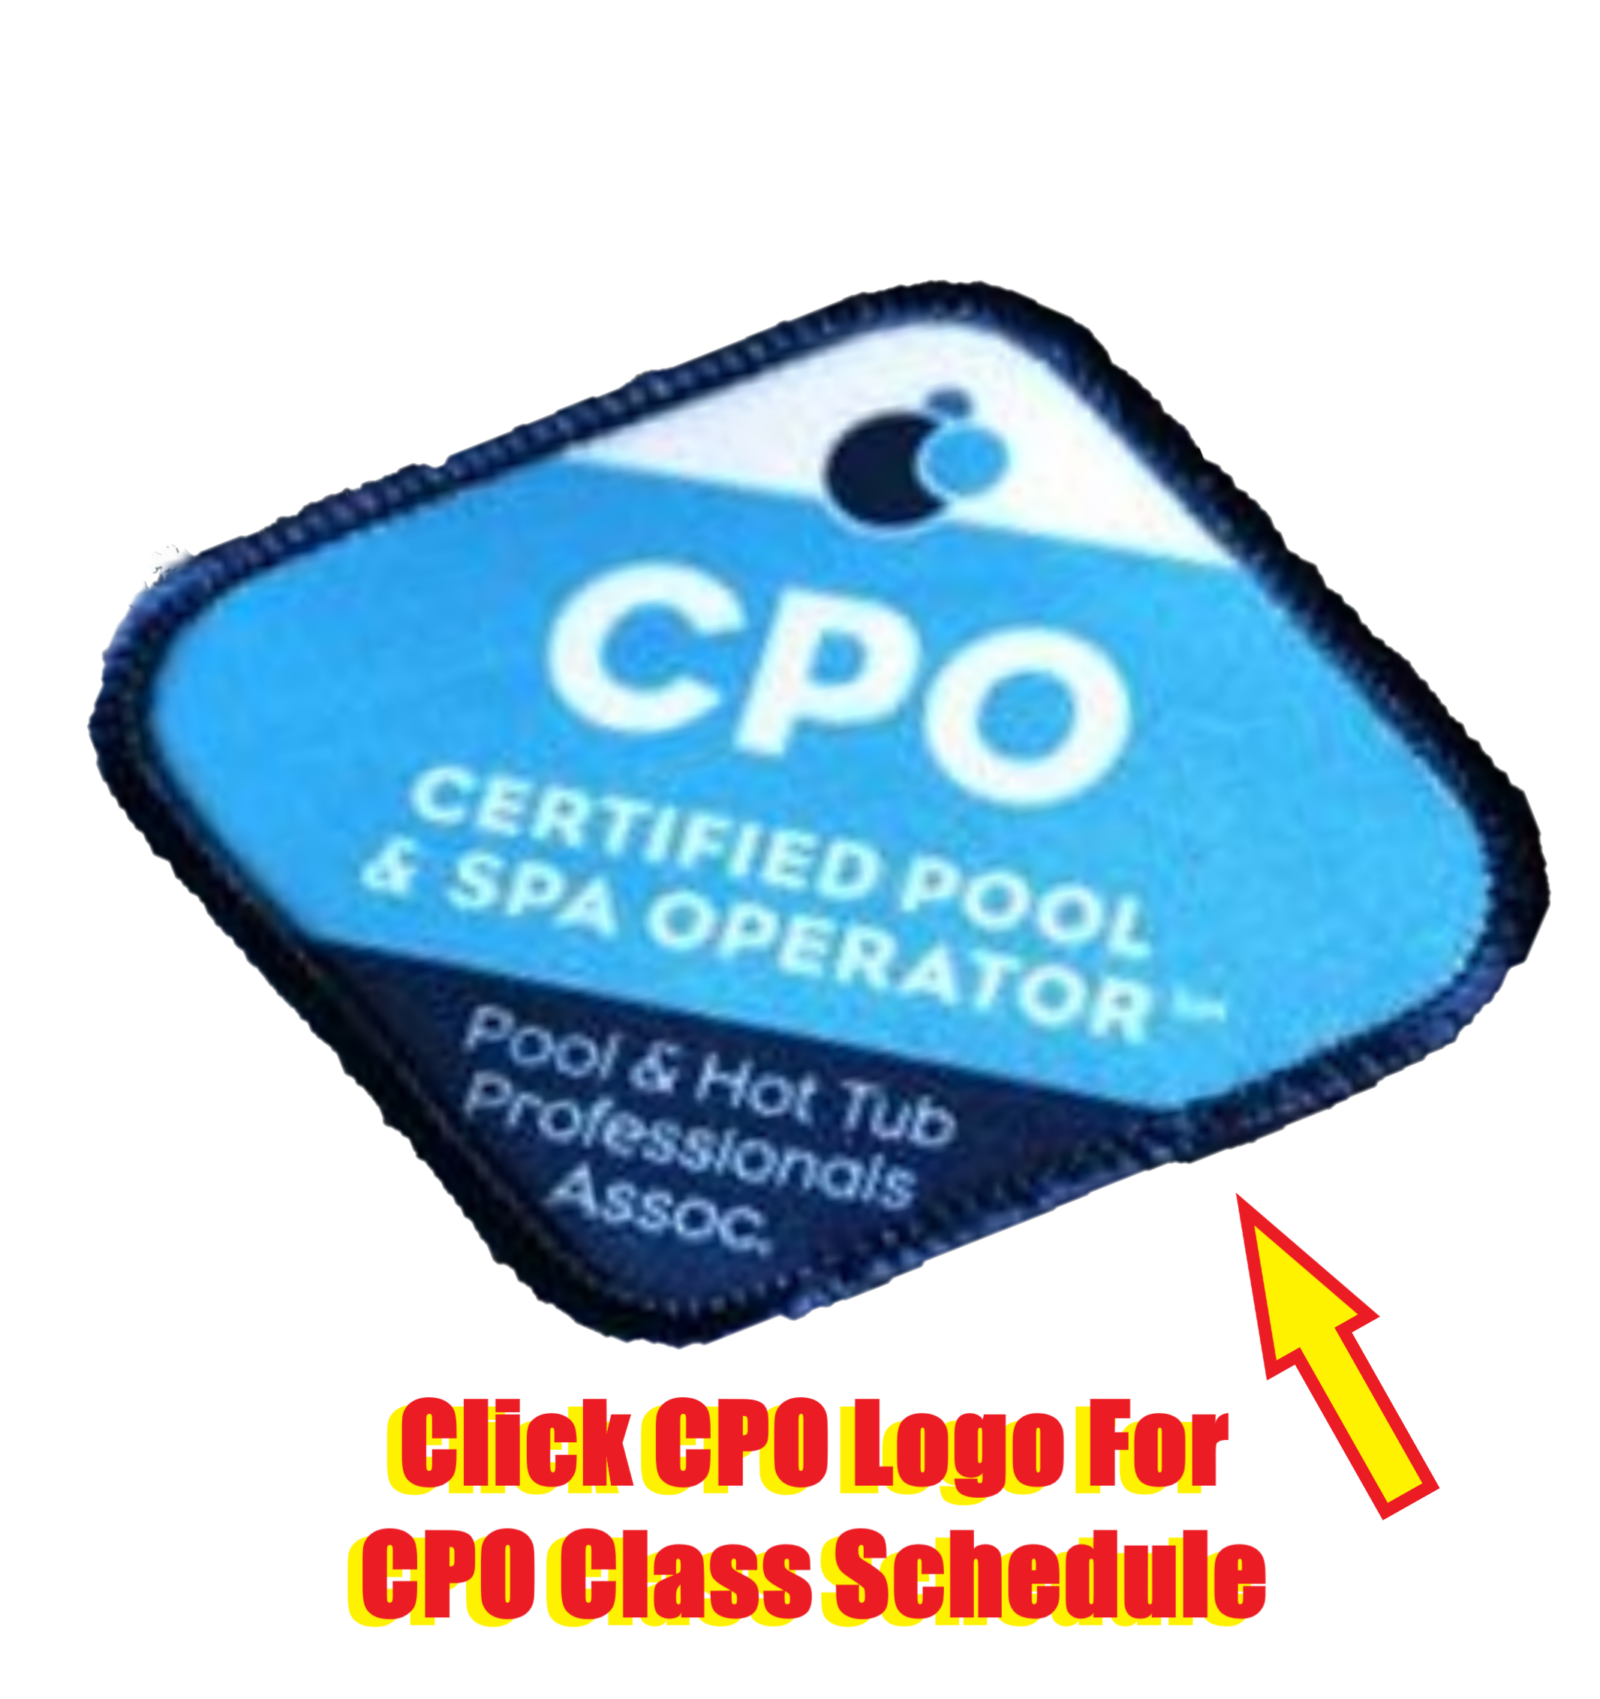 CPO Practice Test Prep CPO CERTIFICATION and More